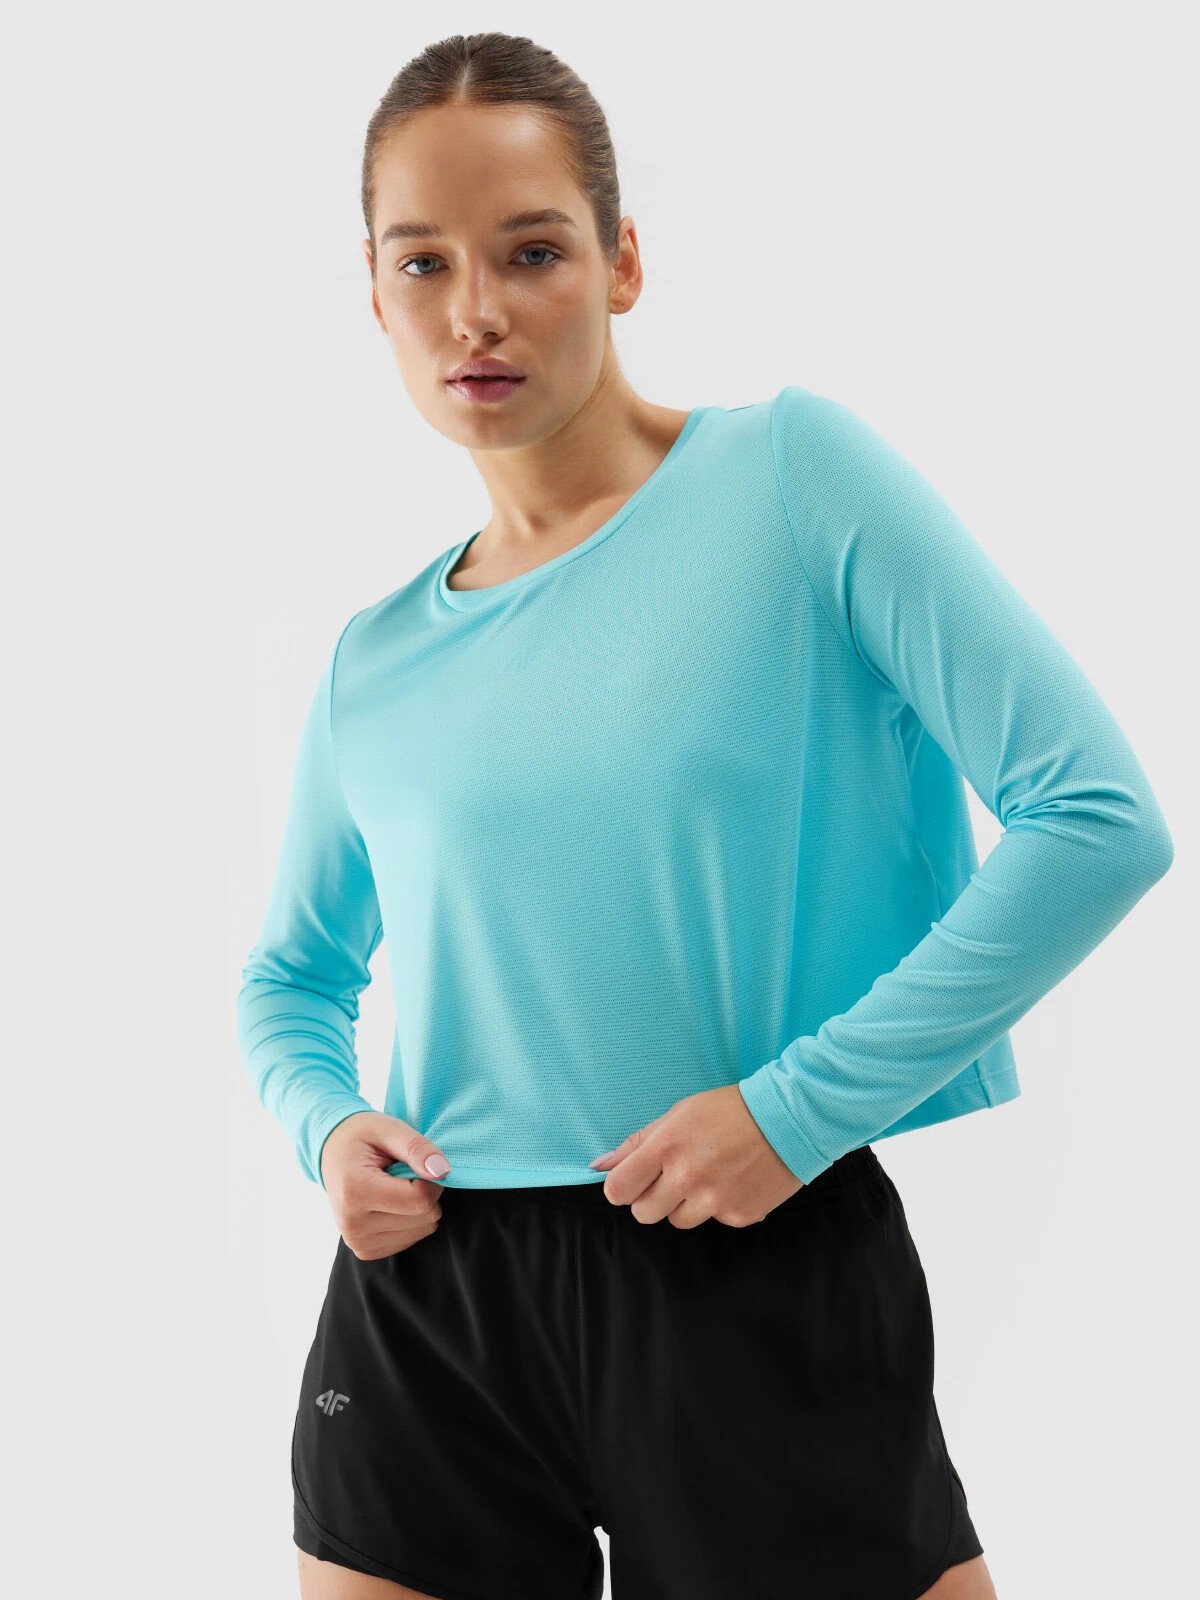 Women's Sports Quick-Drying Long Sleeve T-Shirt loose 4F - Blue